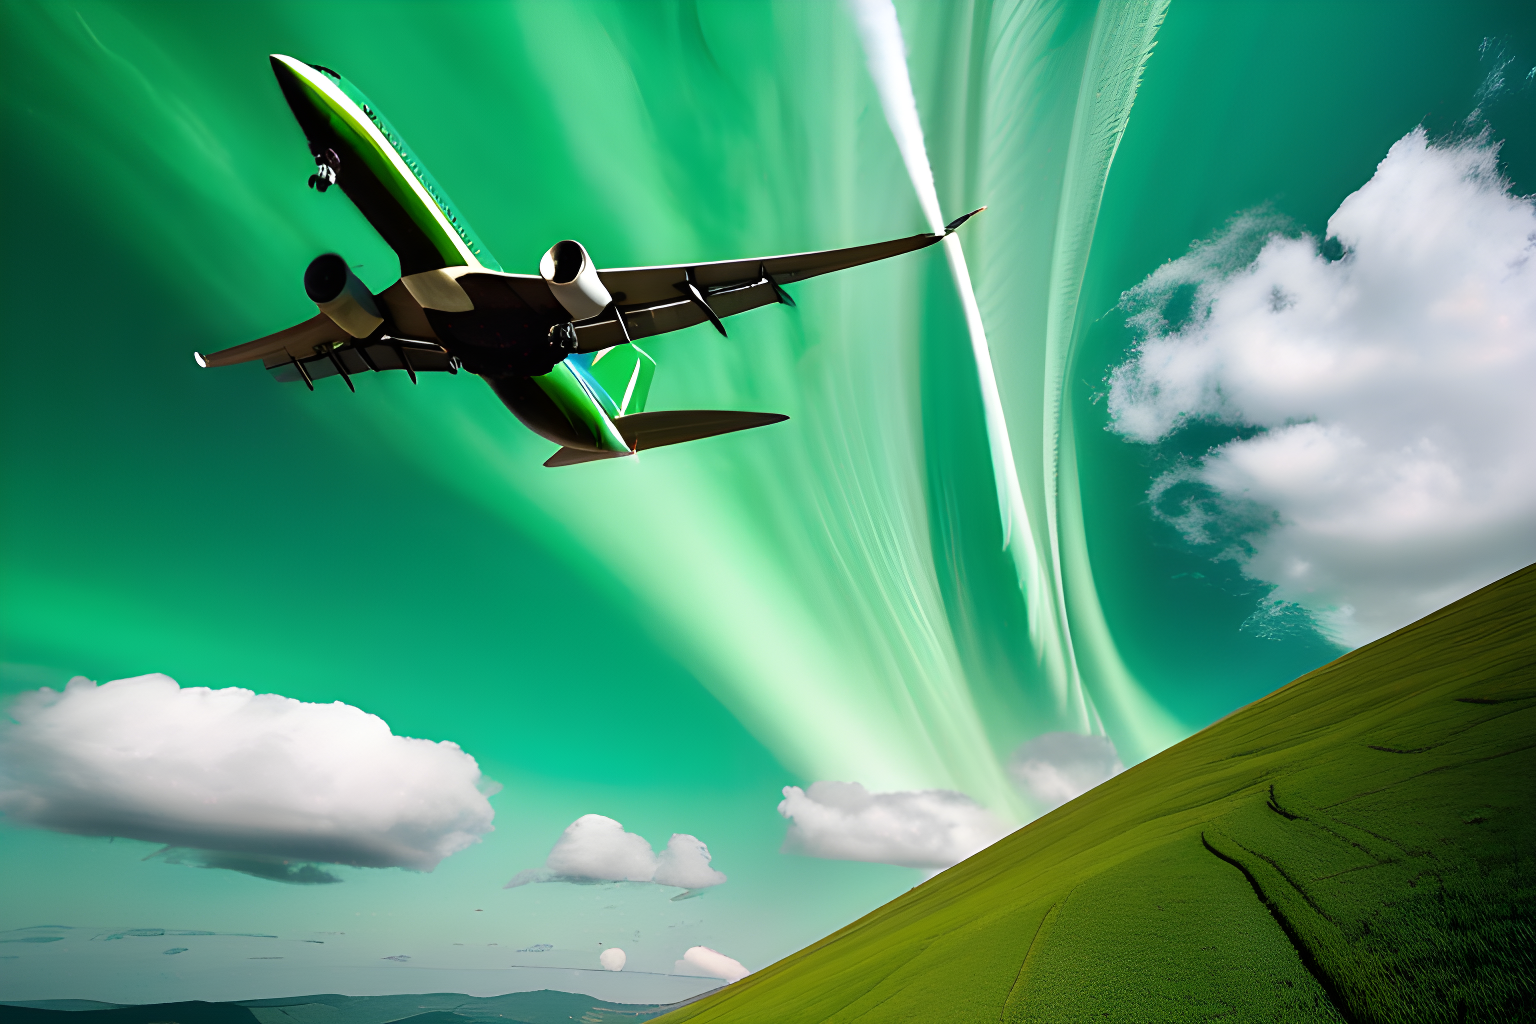 breathtaking photograph of an aircraft flying through a Green Sky